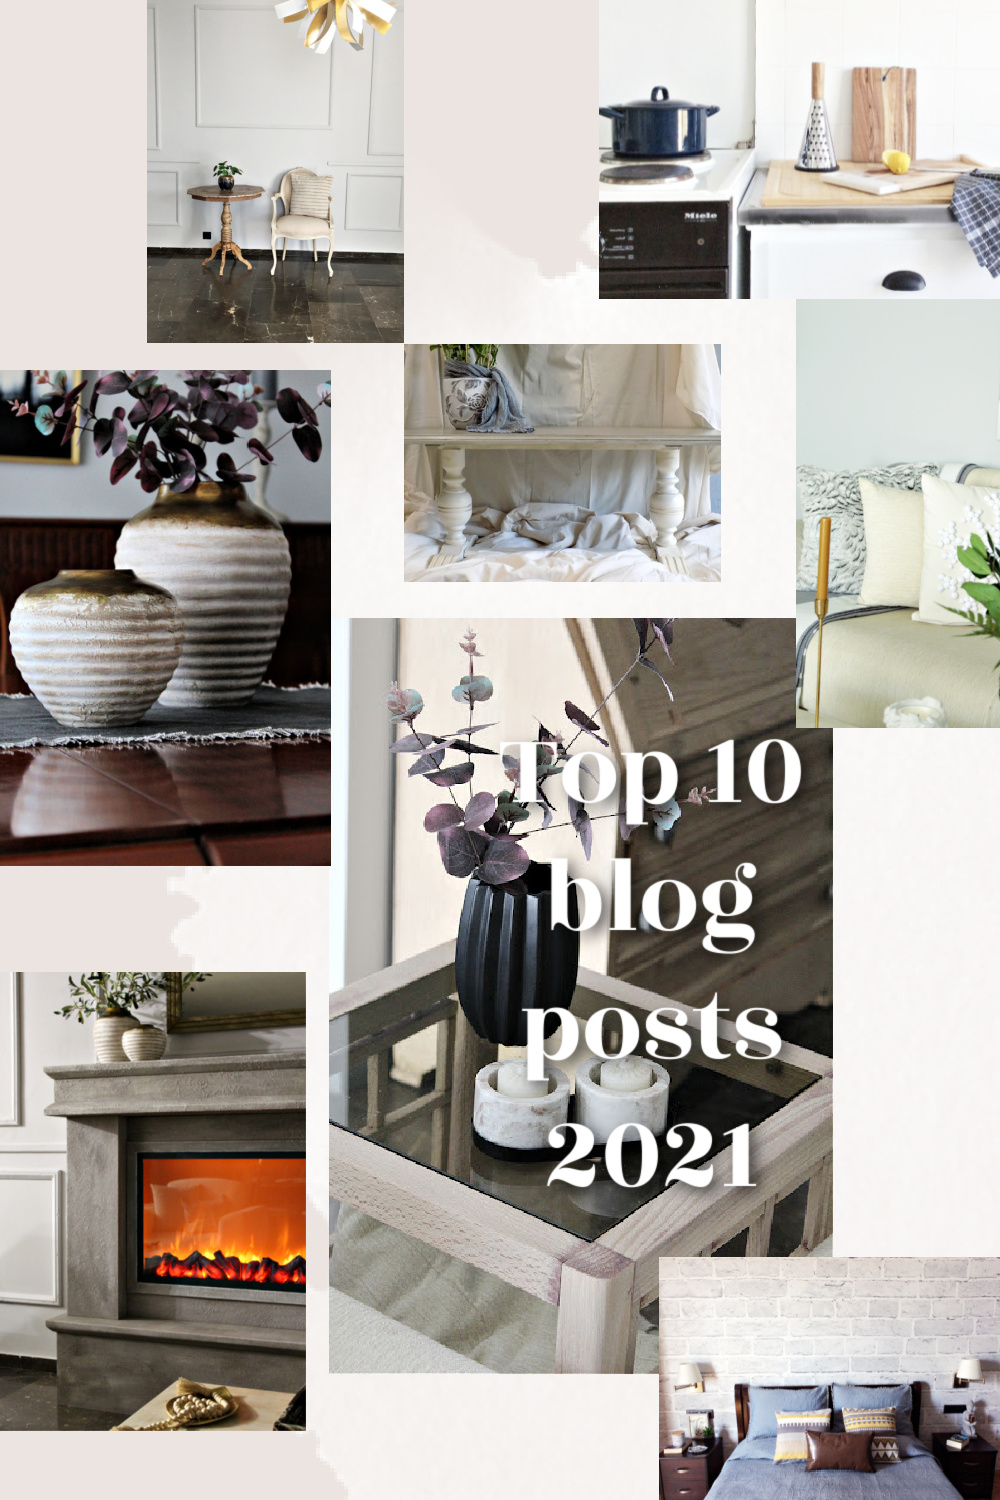 Top 10 blog posts 2021